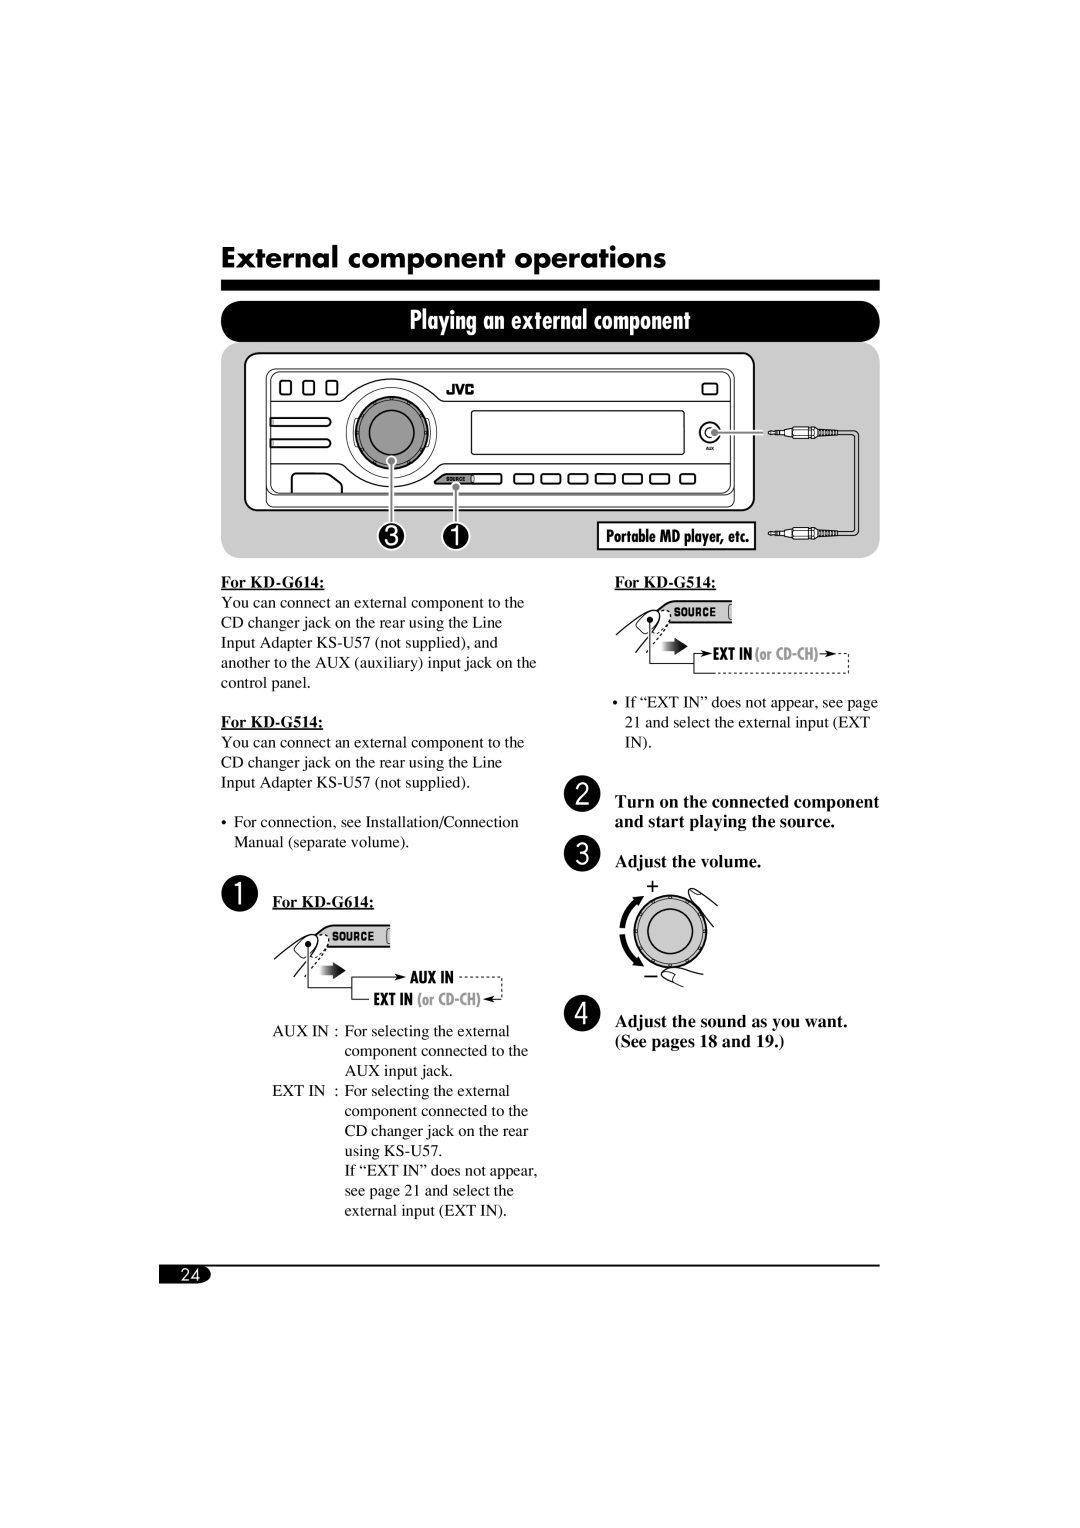 JVC GET0305-001A manual External component operations, Playing an external component, For KD-G514, ~ For KD-G614 